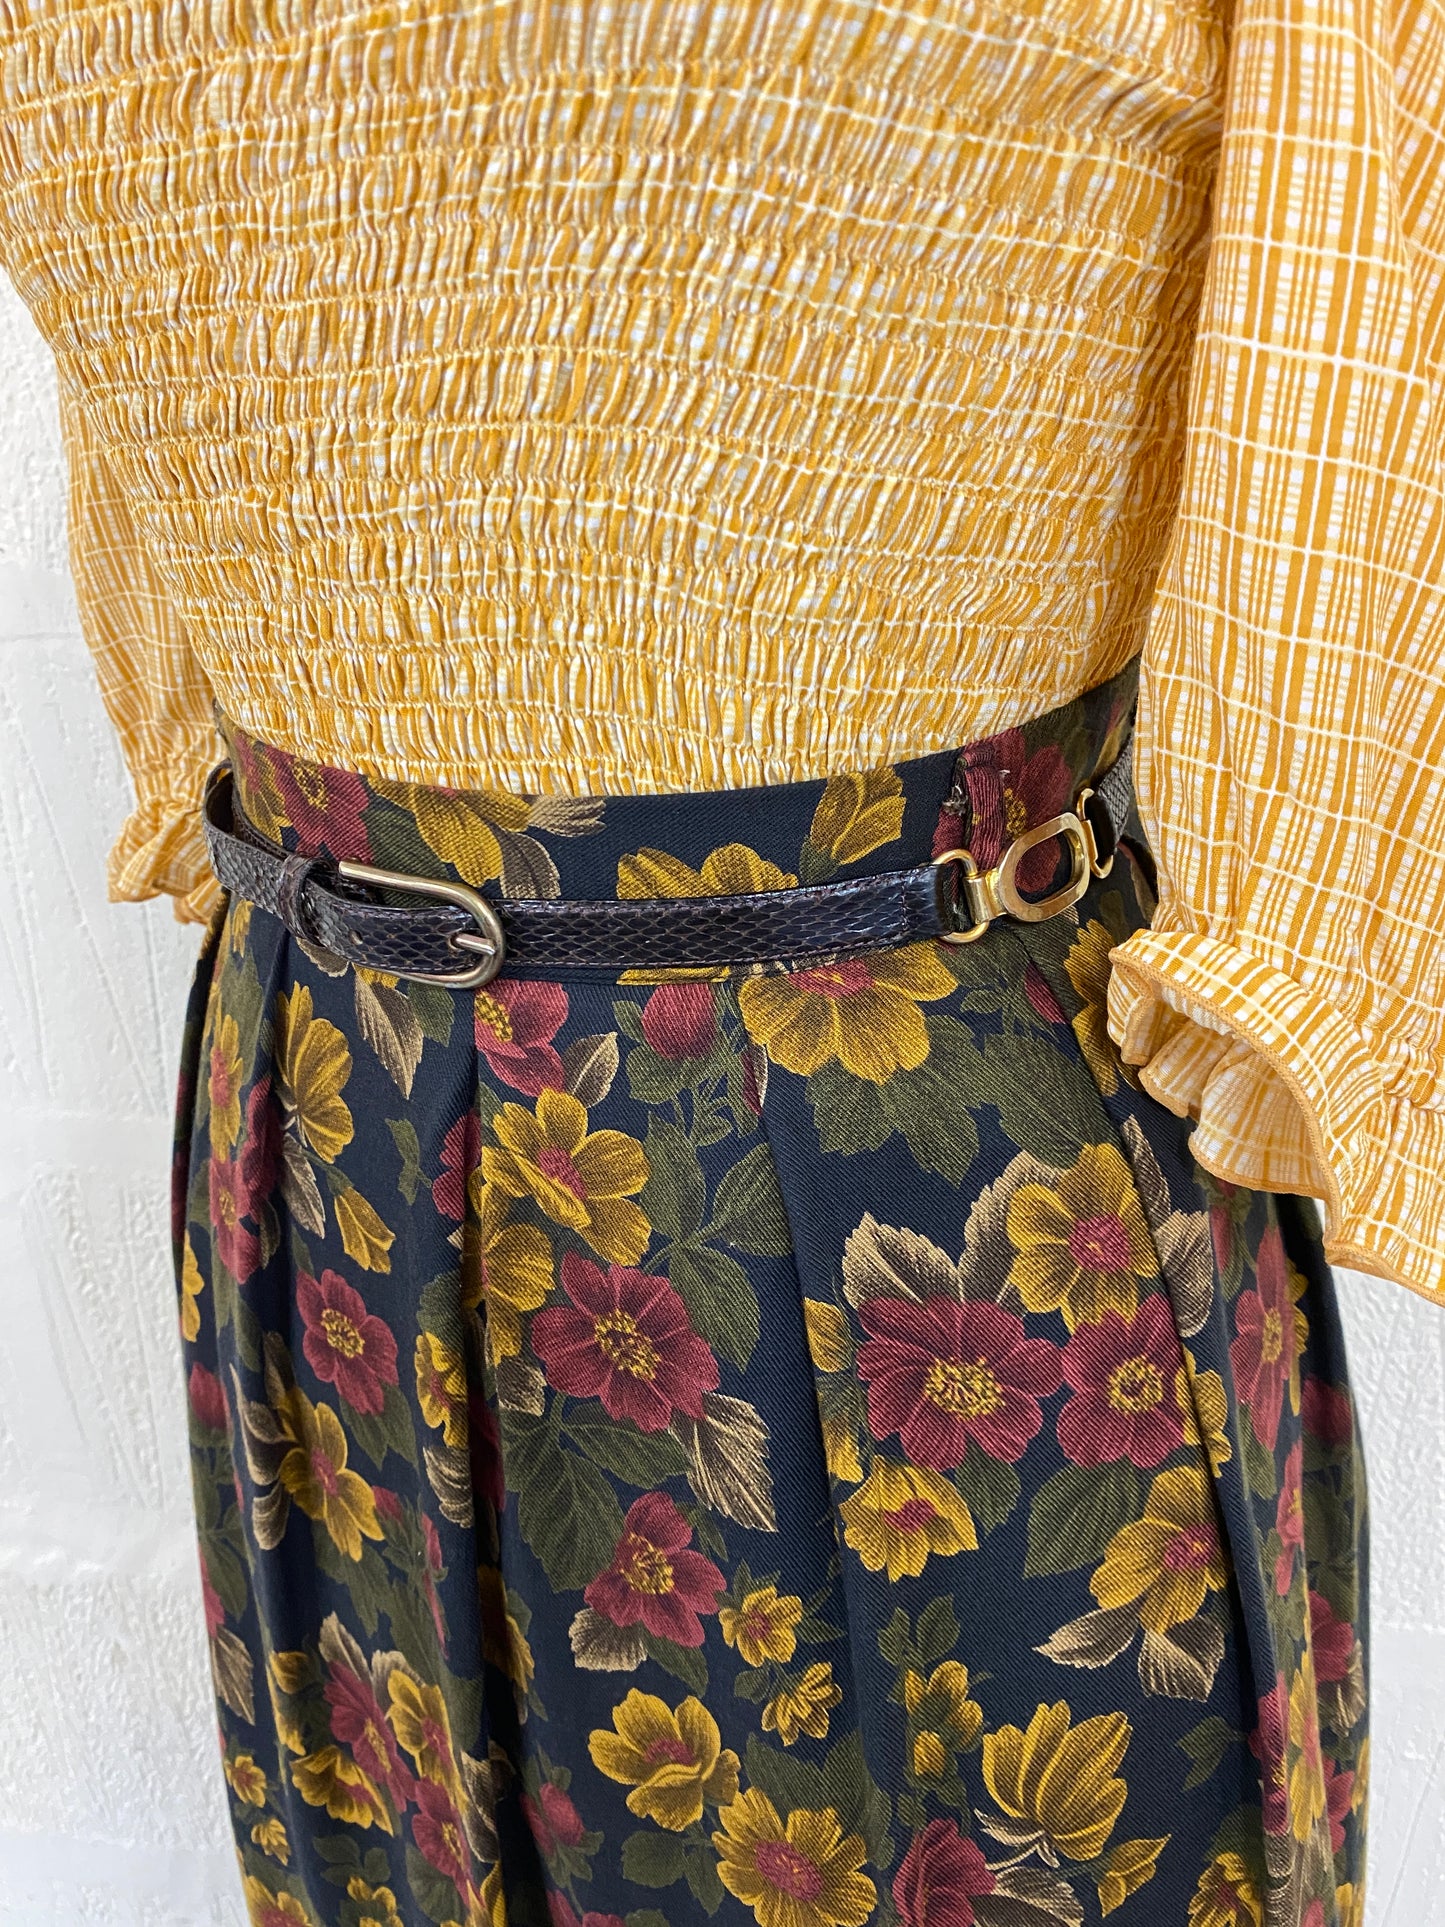 Yellow Shirred Dress/Long Top Size 8